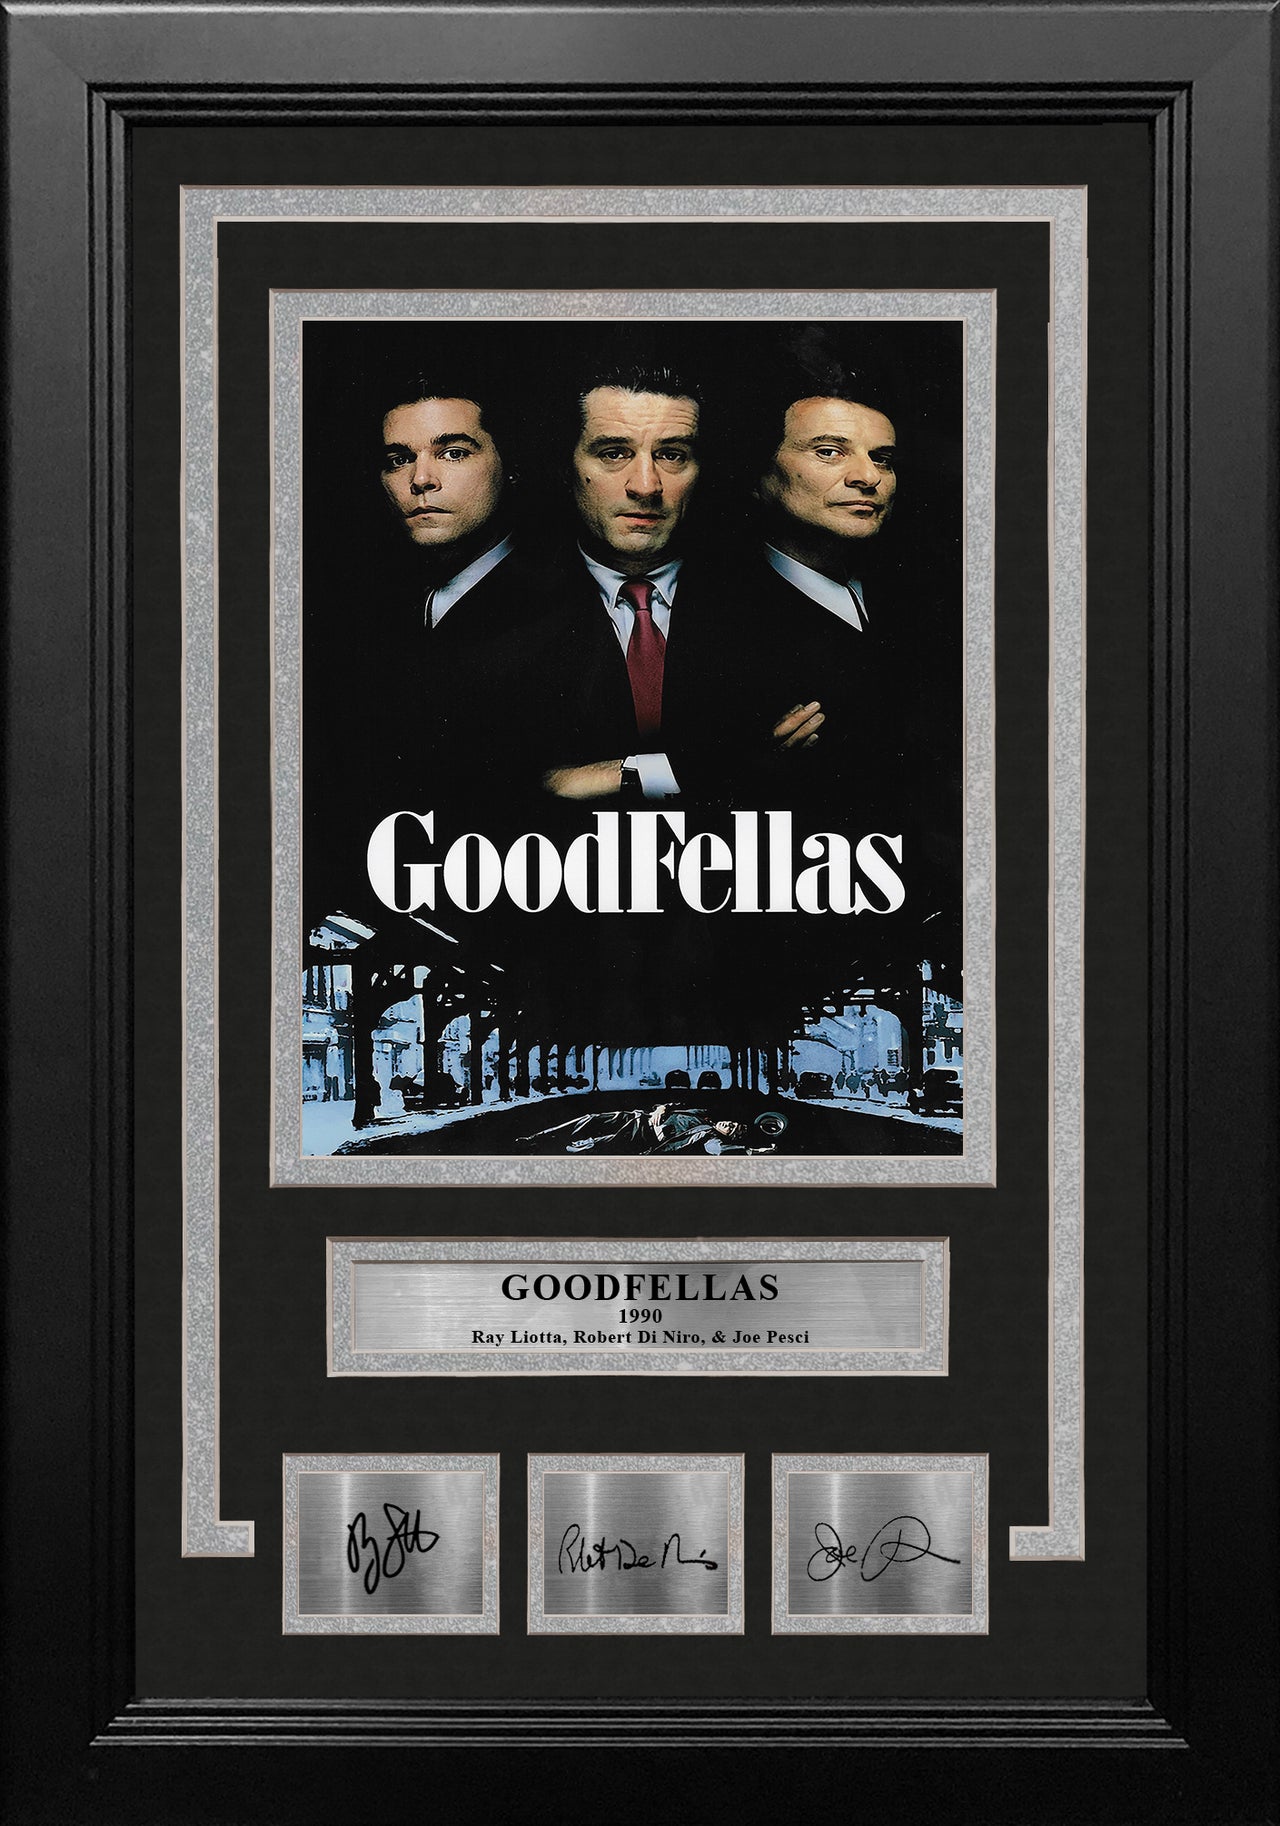 Goodfellas 8" x 10" Framed Photo with Engraved Autograph (Ray Liotta, Robert De Niro, Joe Pesci) - Dynasty Sports & Framing 